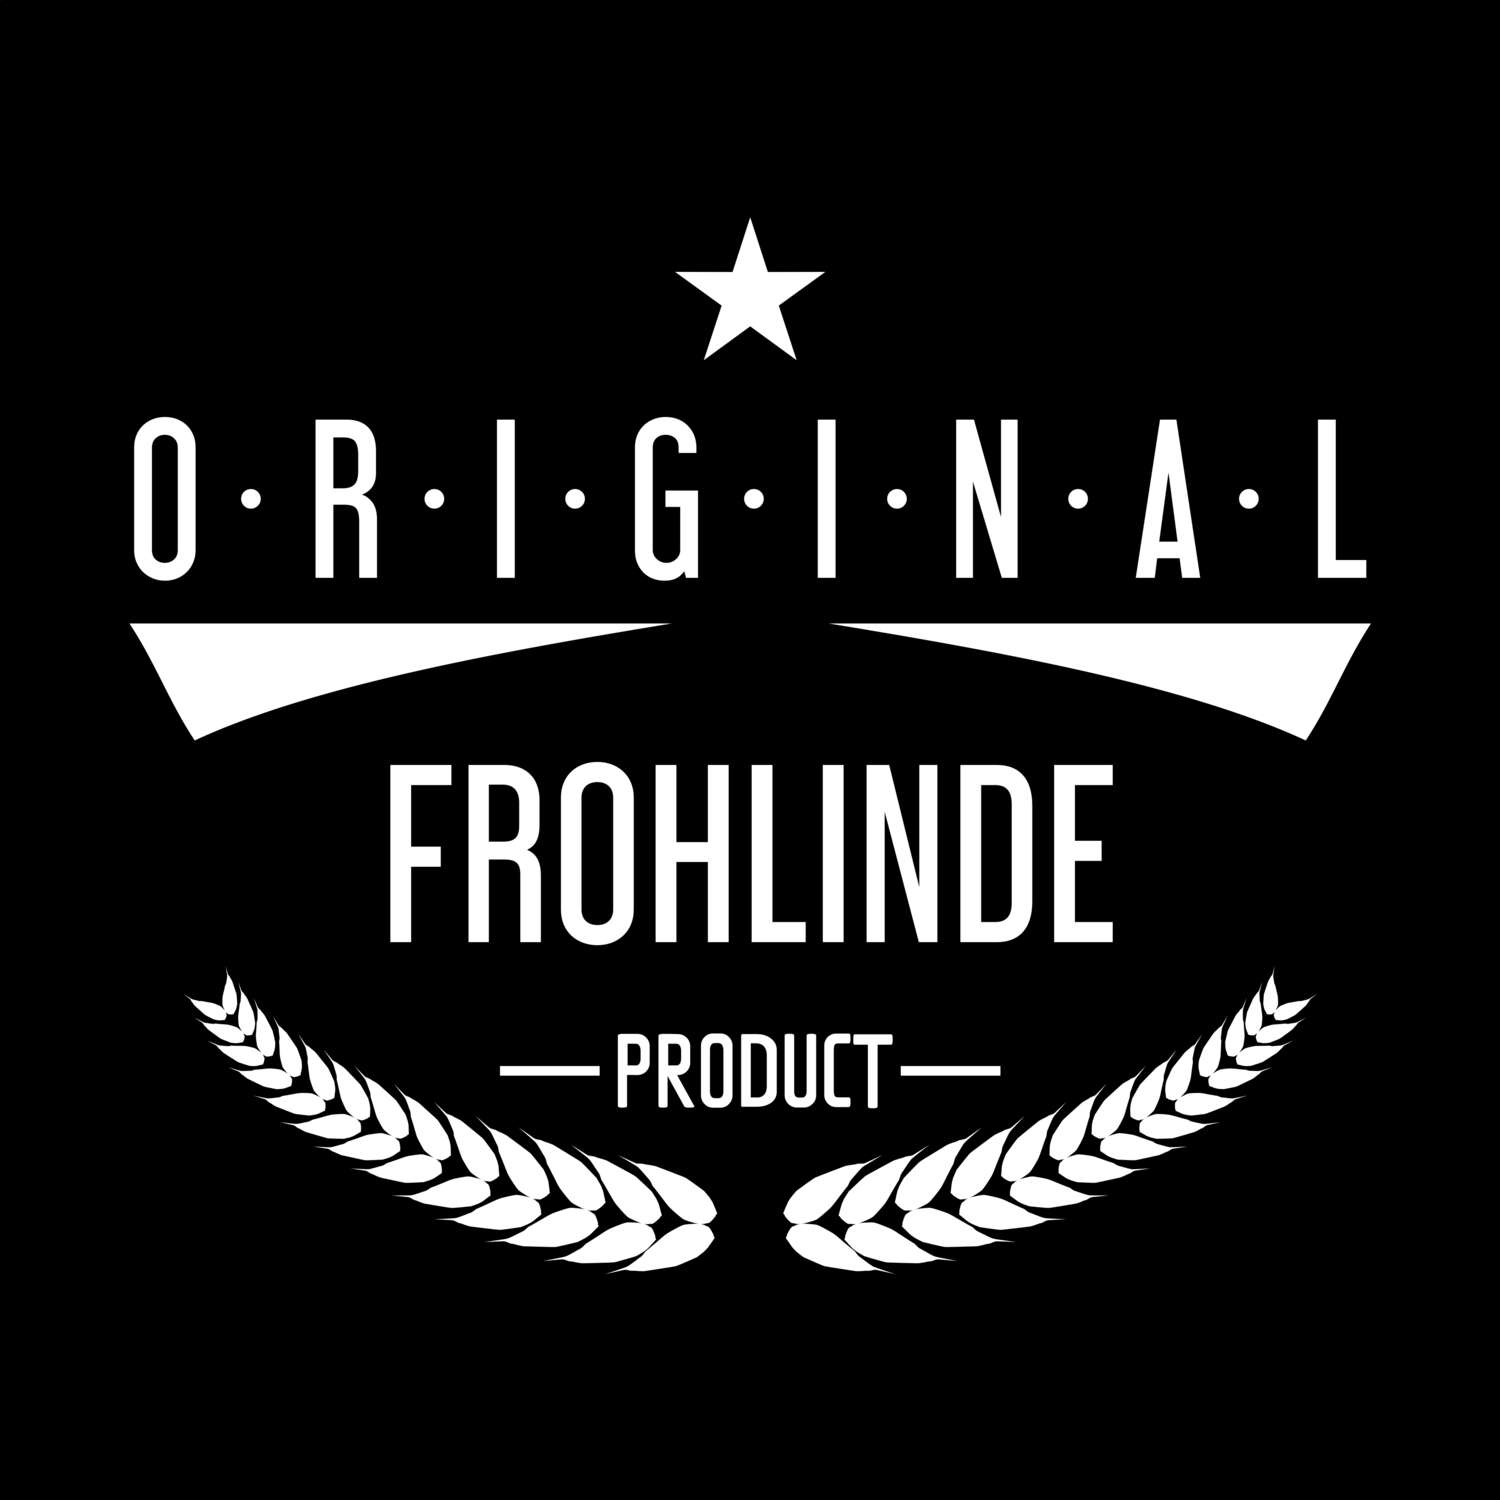 Frohlinde T-Shirt »Original Product«